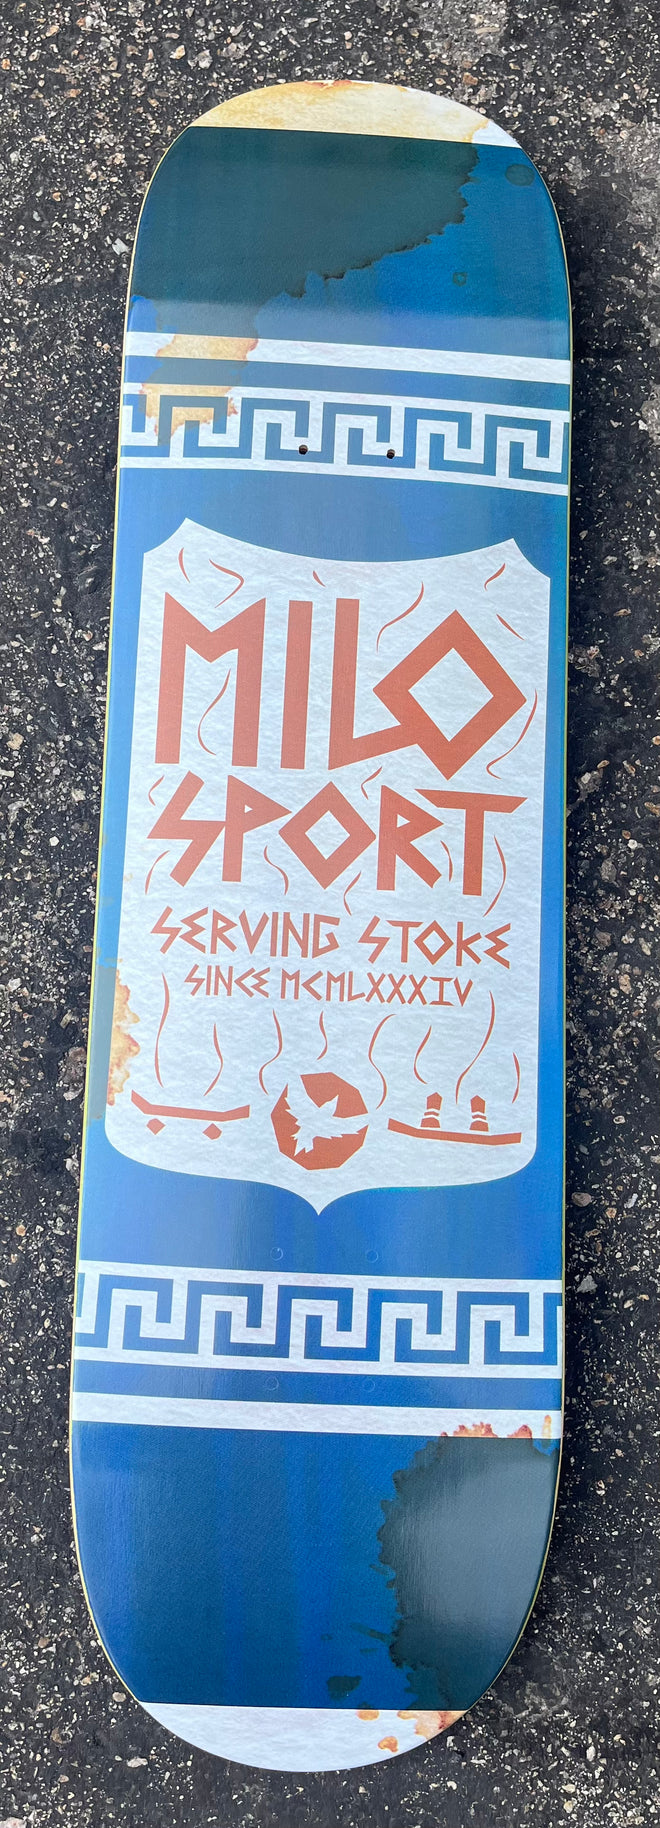 Milosport Serving Stoke Skateboard Deck - M I L O S P O R T